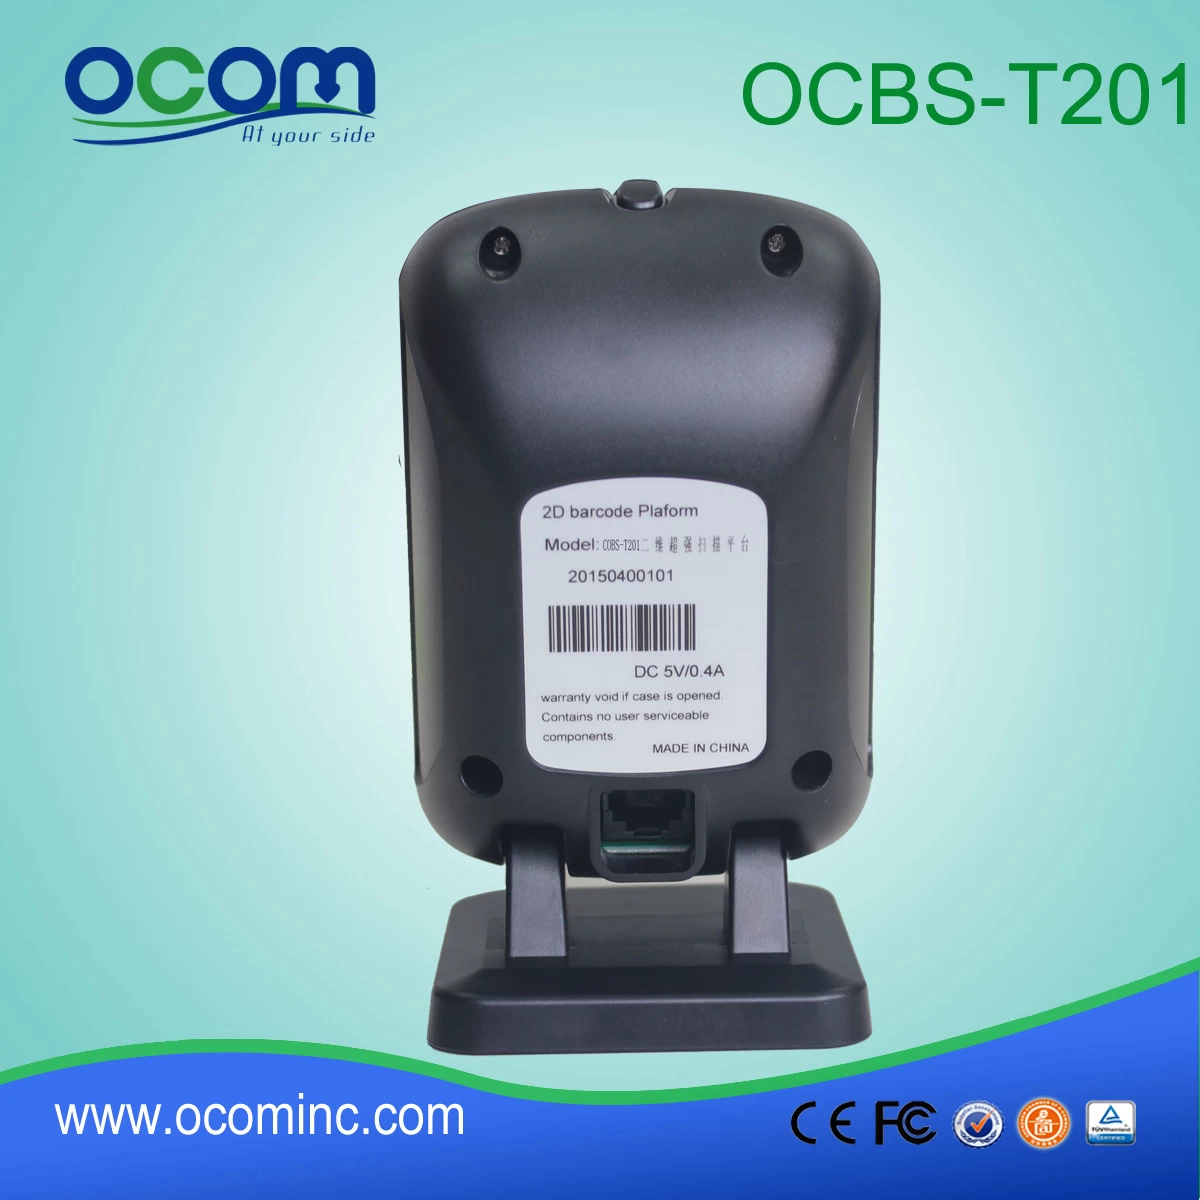 supermarket omni barcode reader pdf417 (OCBS-T201)